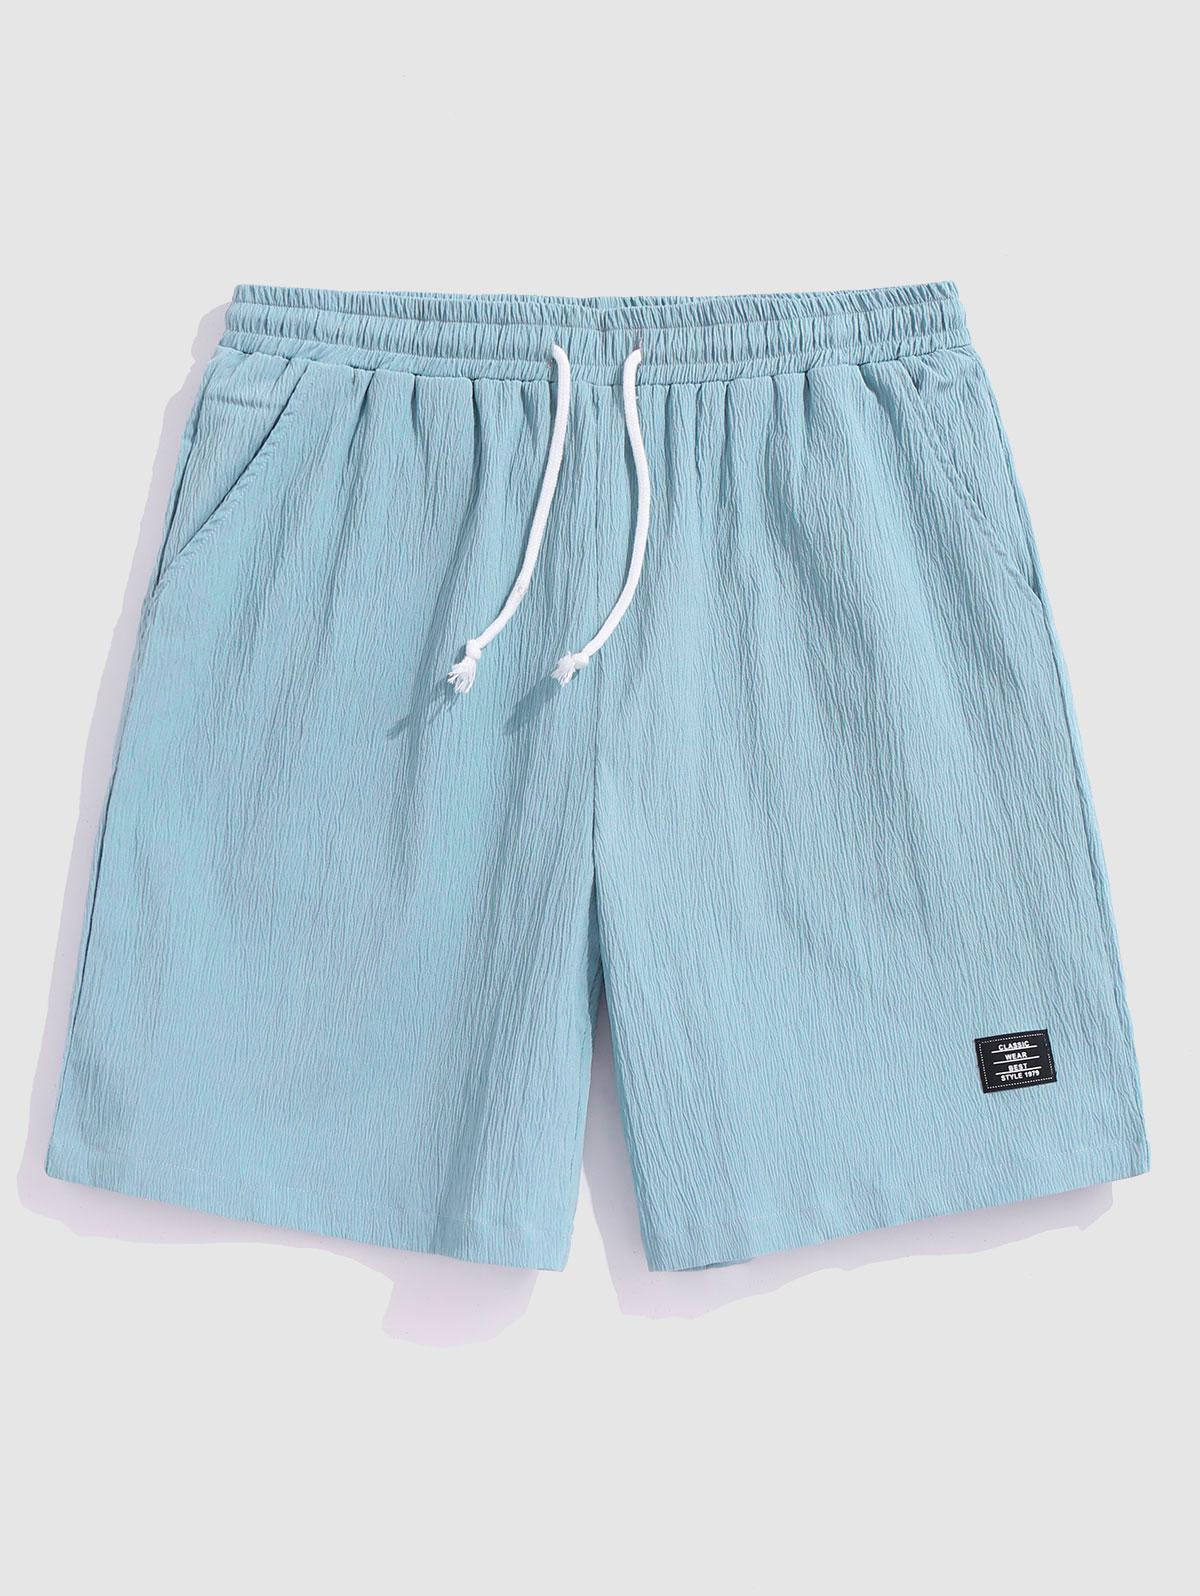 ZAFUL Drawstring Applique Decor Pocket Plain Wrinkle Shorts L Light blue